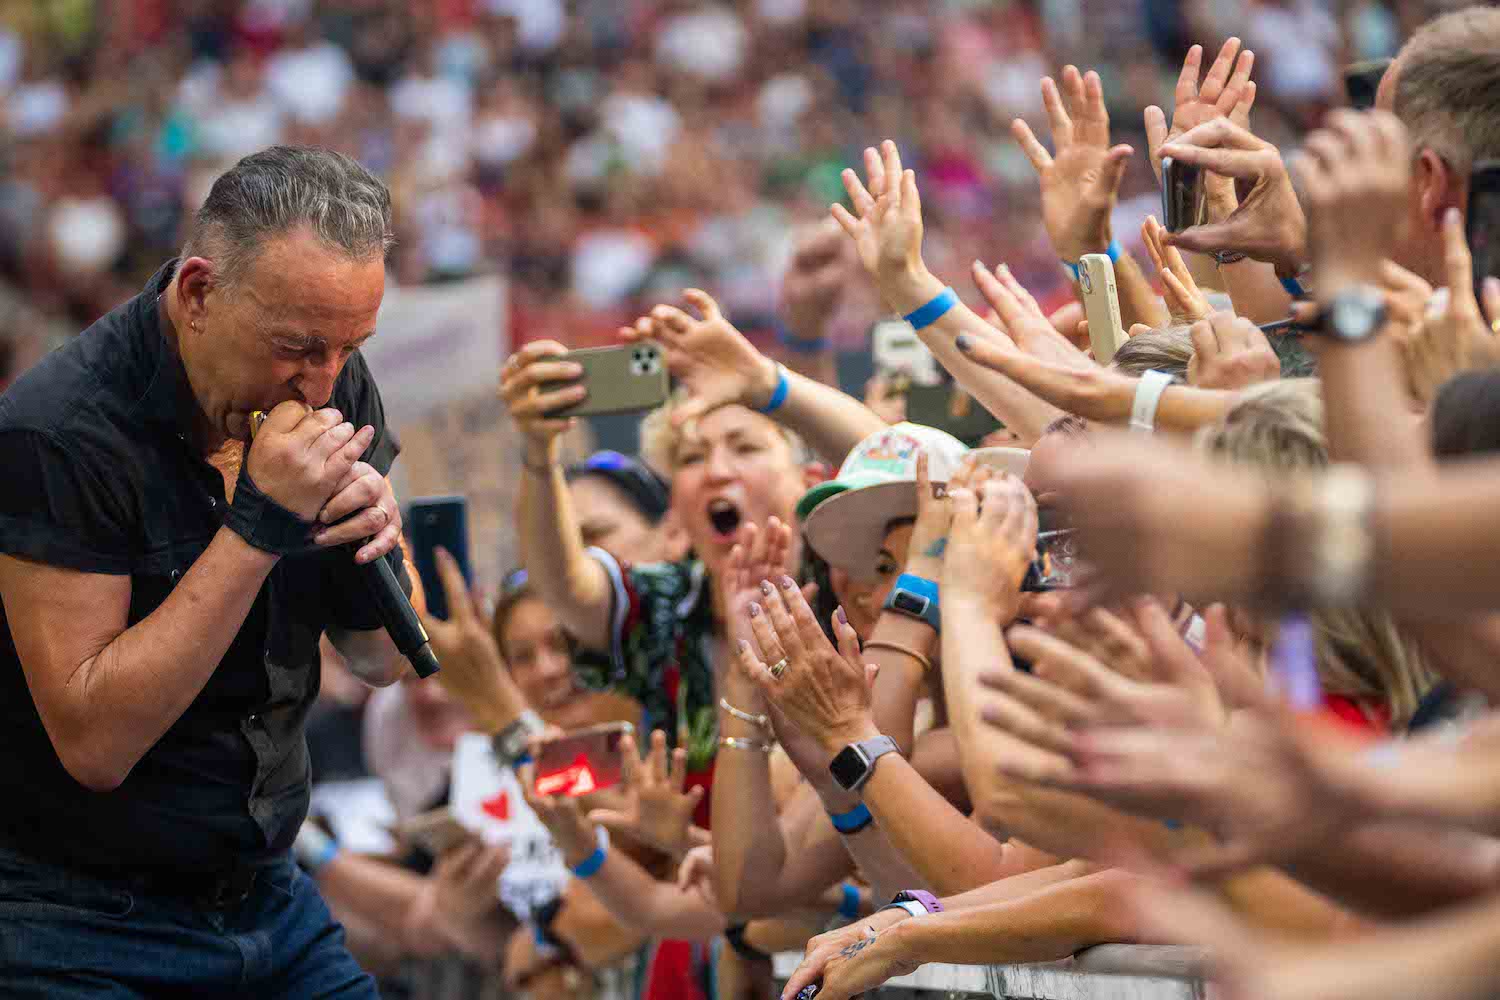 Bruce Springsteen & E Street Band at Ernst Happel Stadion, Vienna, Austria on July 18, 2023.